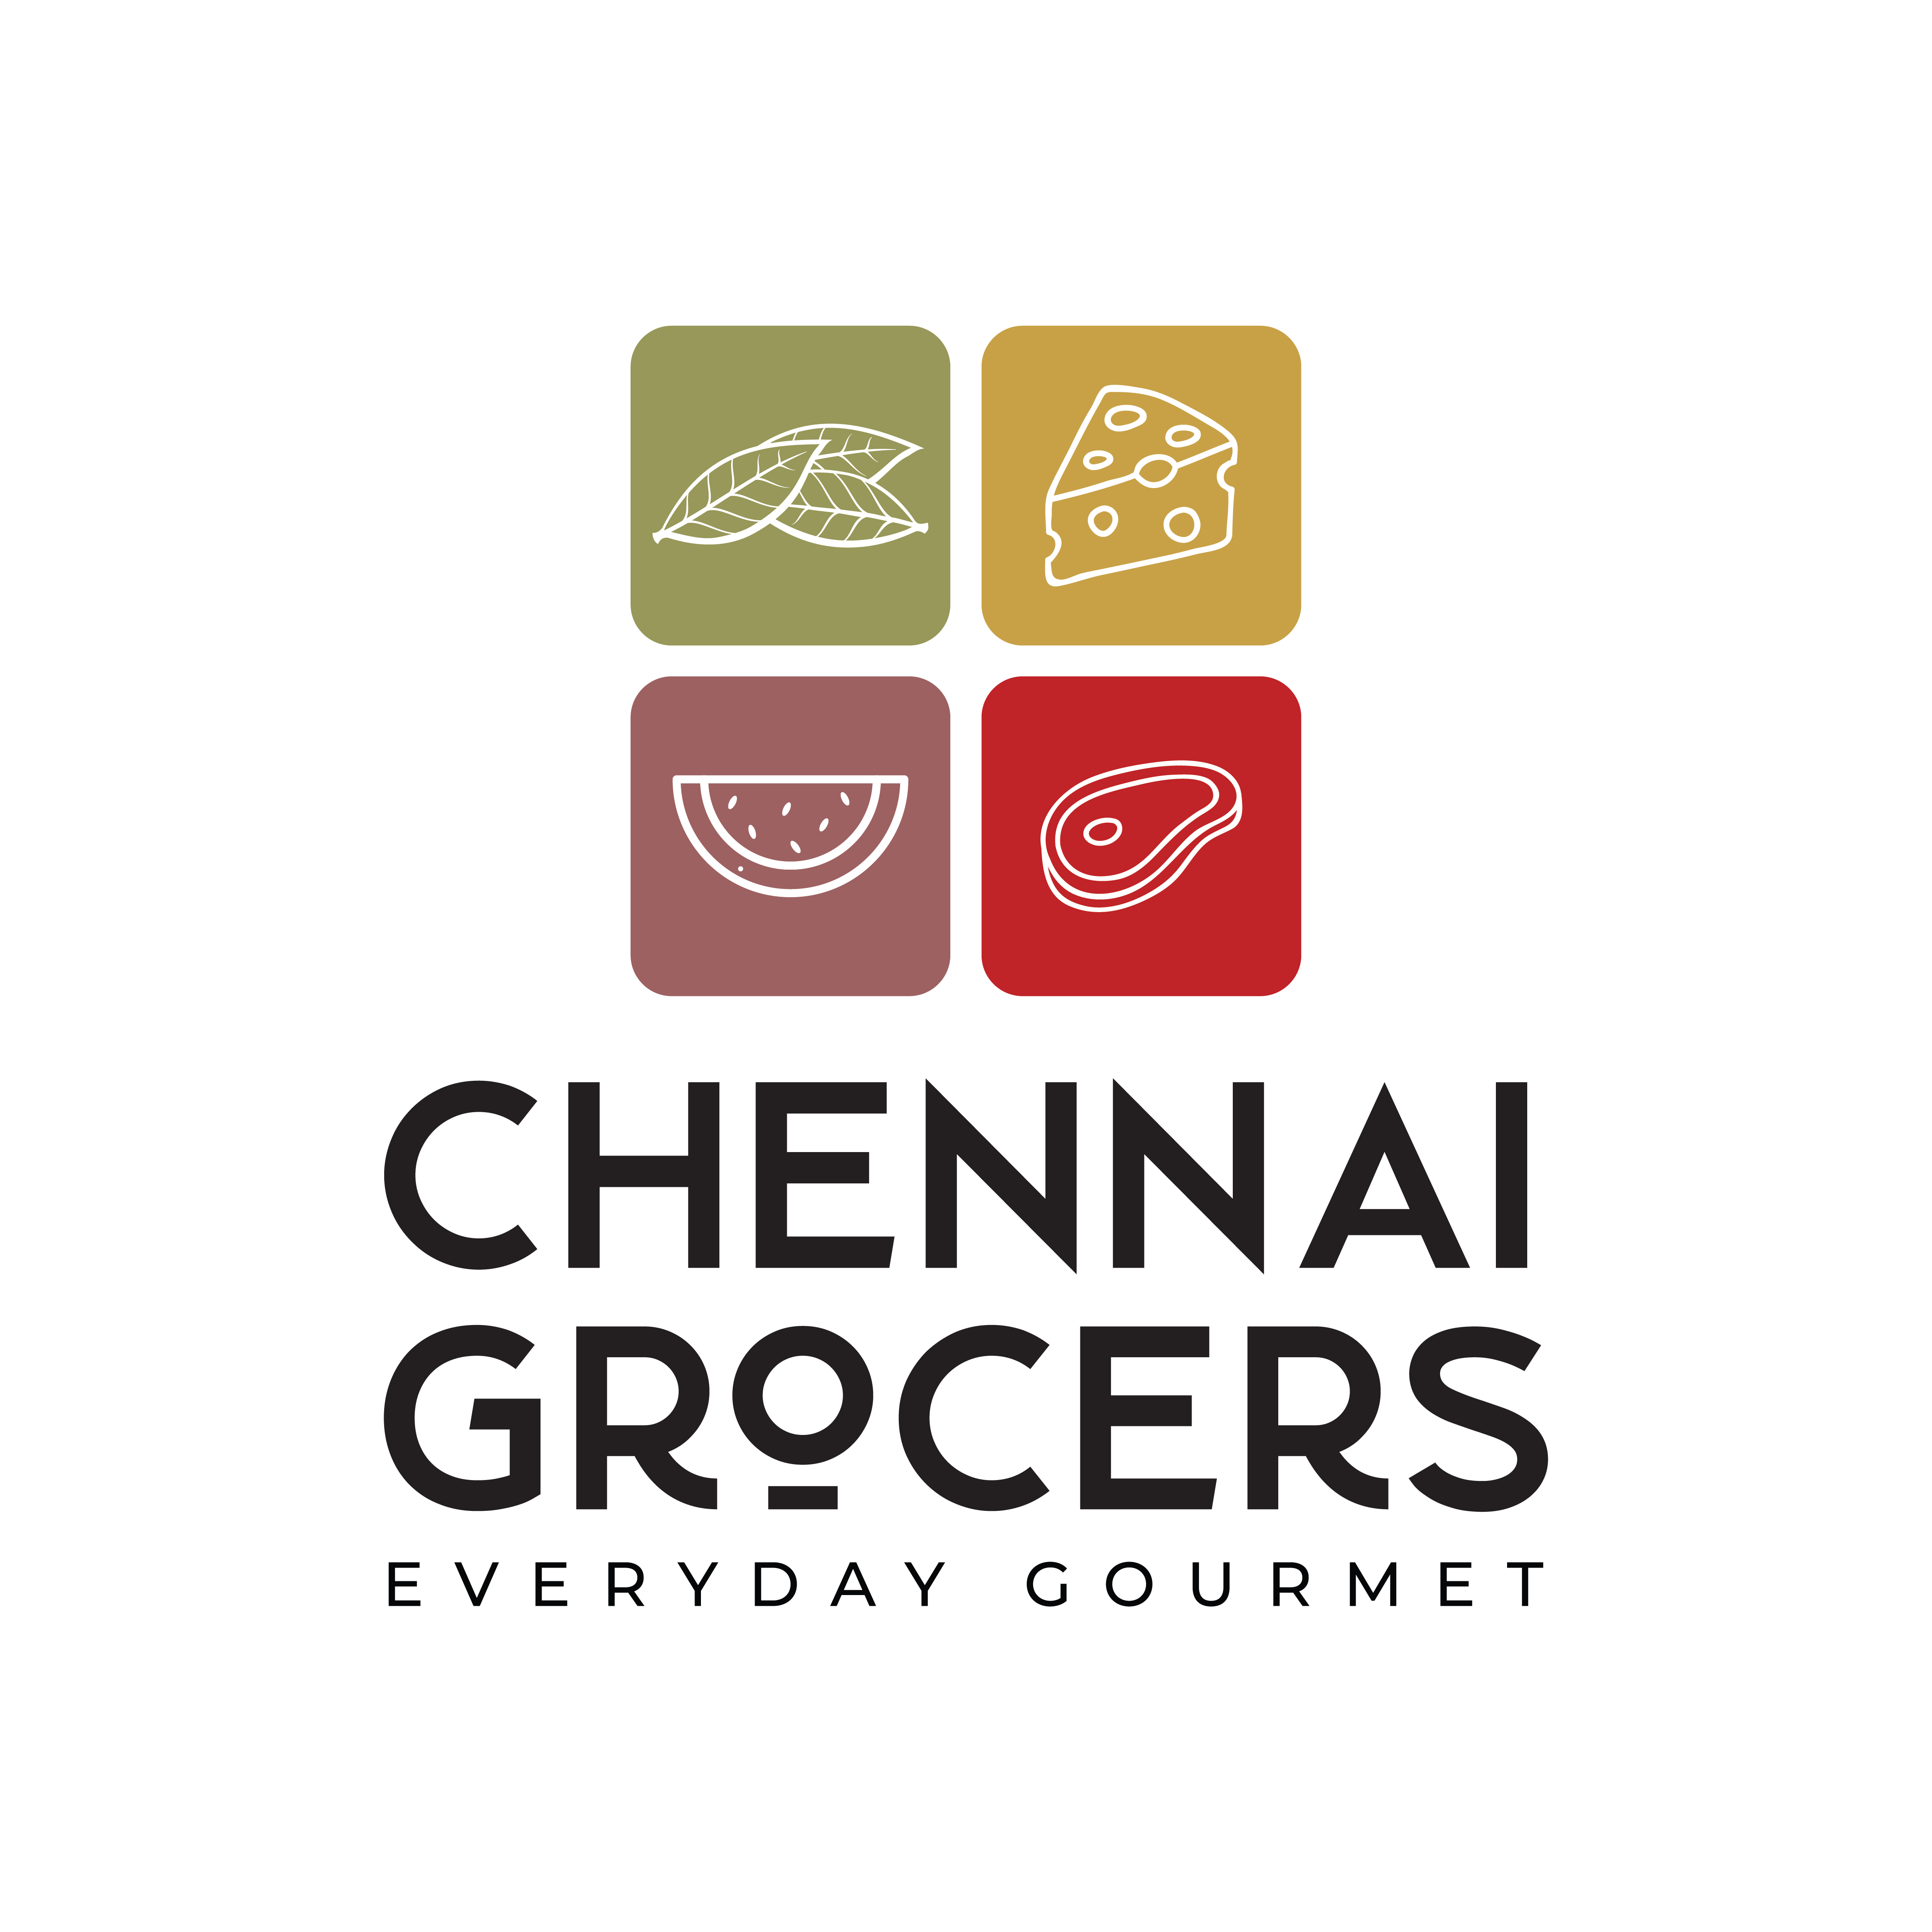 Chennai Grocers